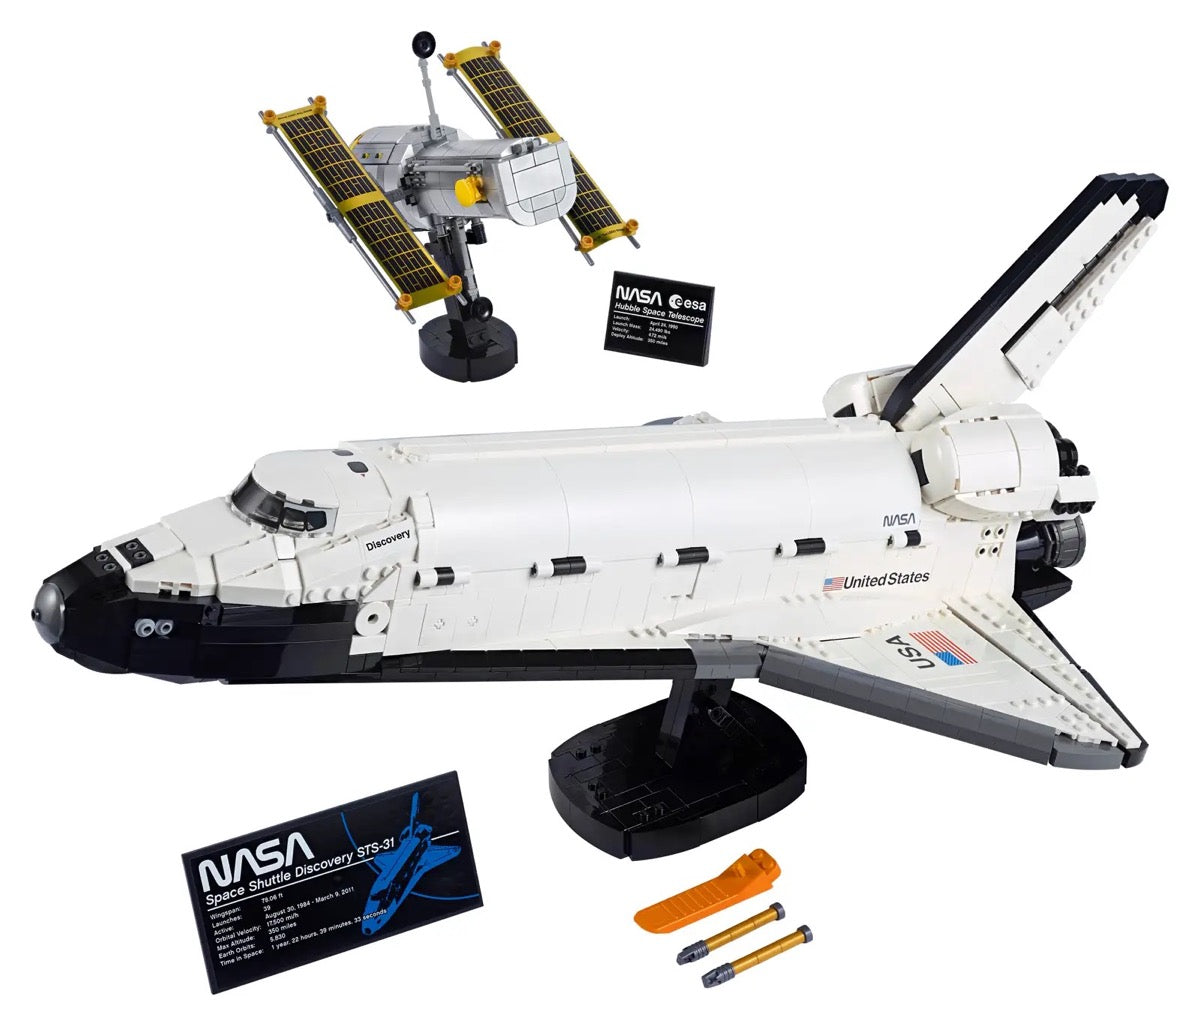 Lego 10283 creator expert nasa space shuttle discovery